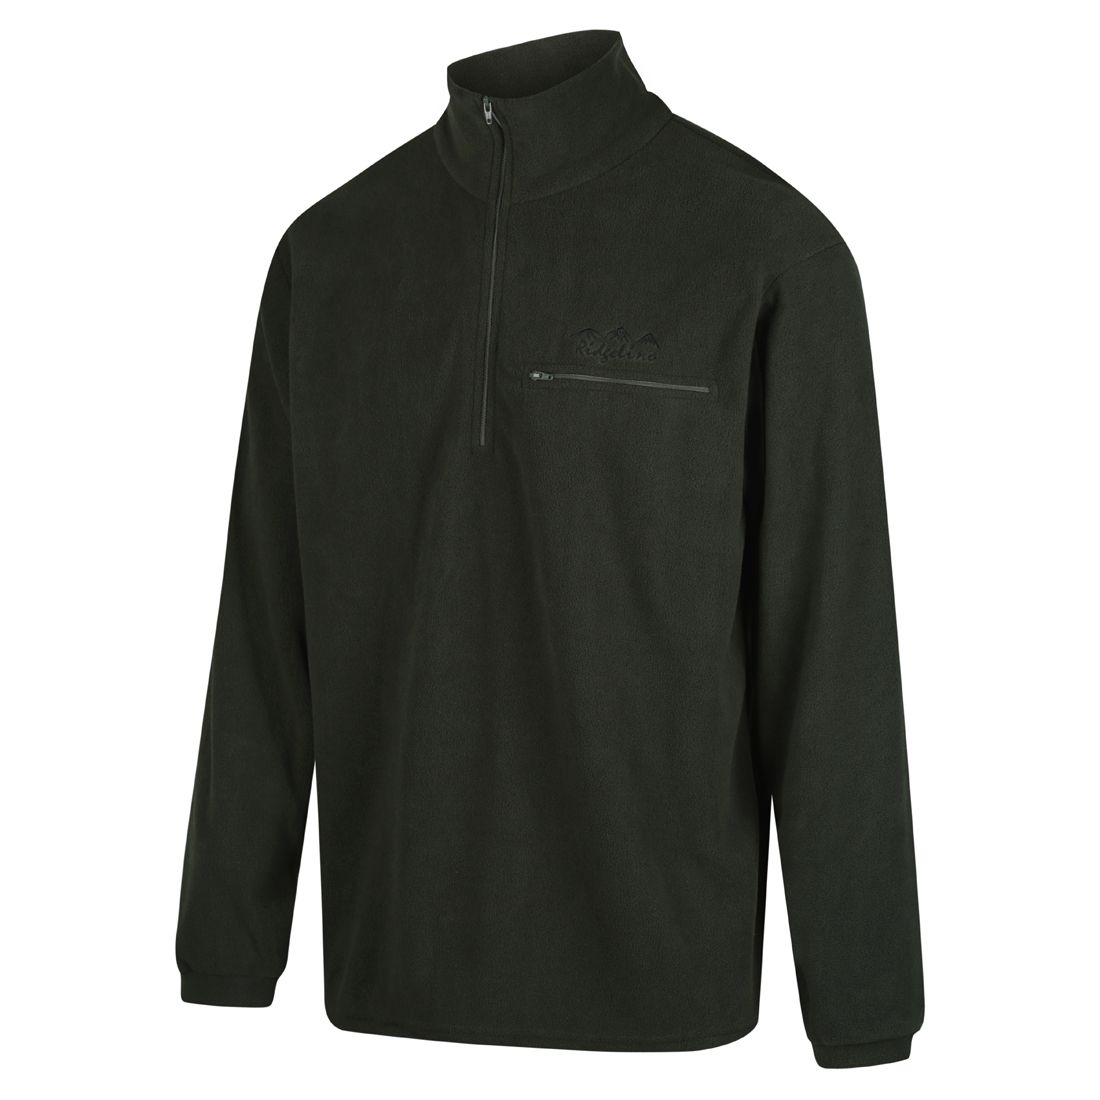 Front view of Ridgeline Micro Fleece Long Sleeve Shirt in Olive Green